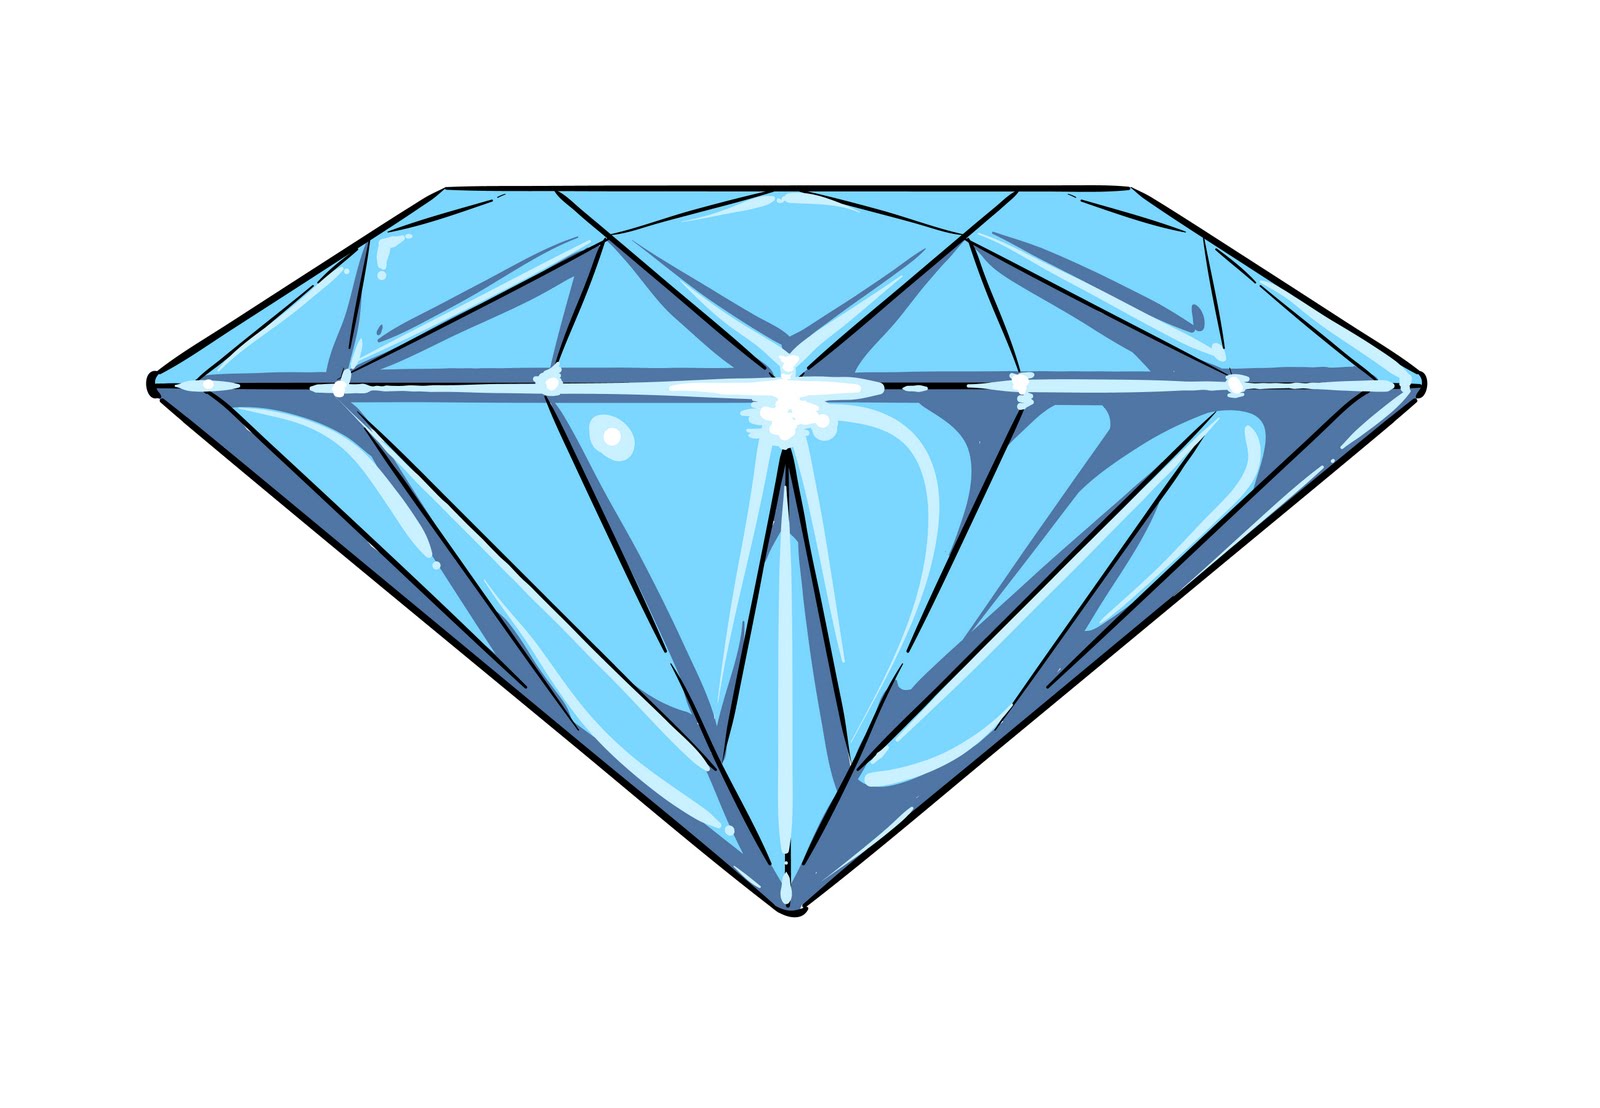 diamond clipart